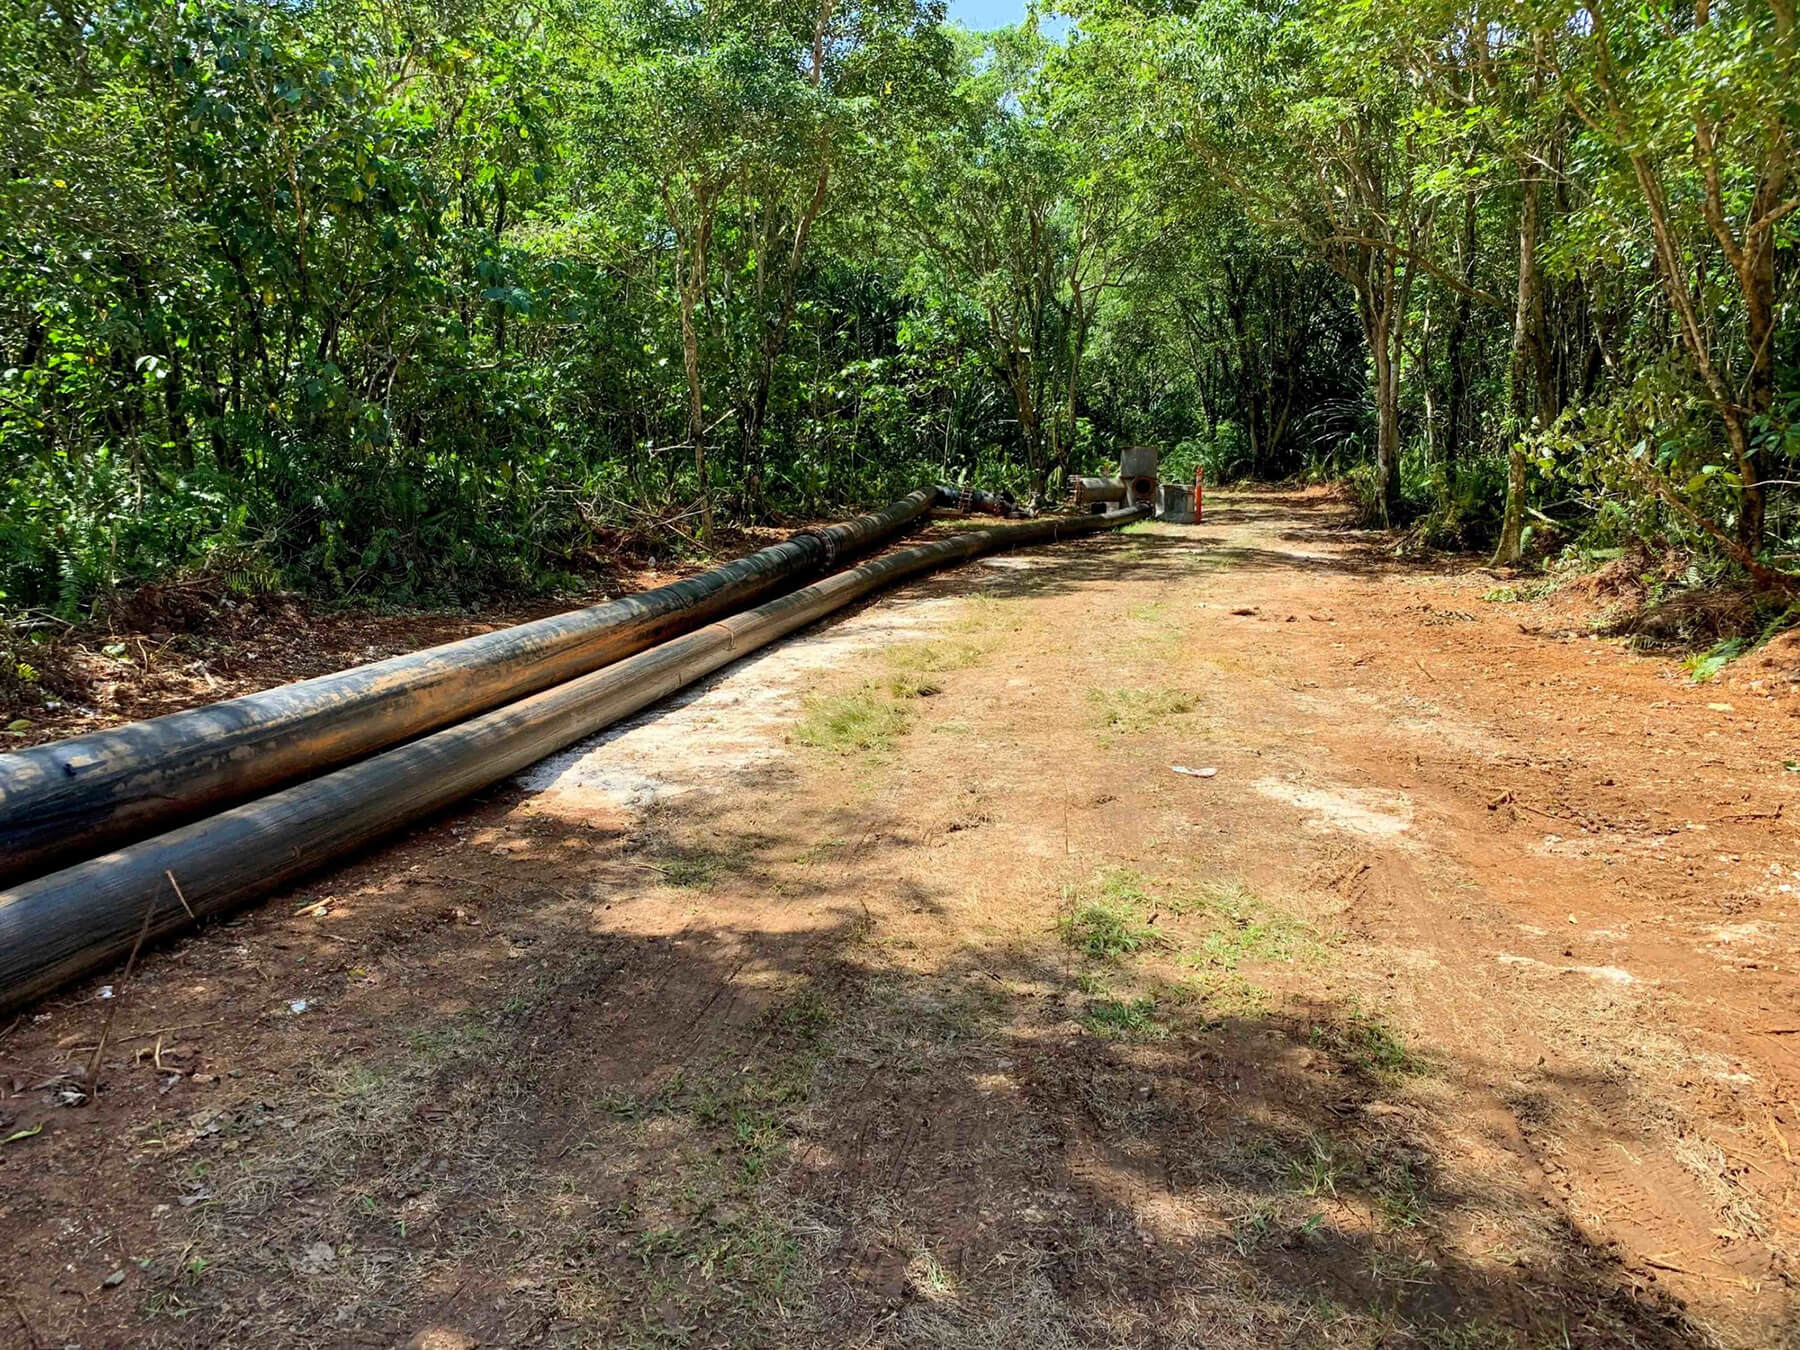 A pipeline winding through jungle terrain.